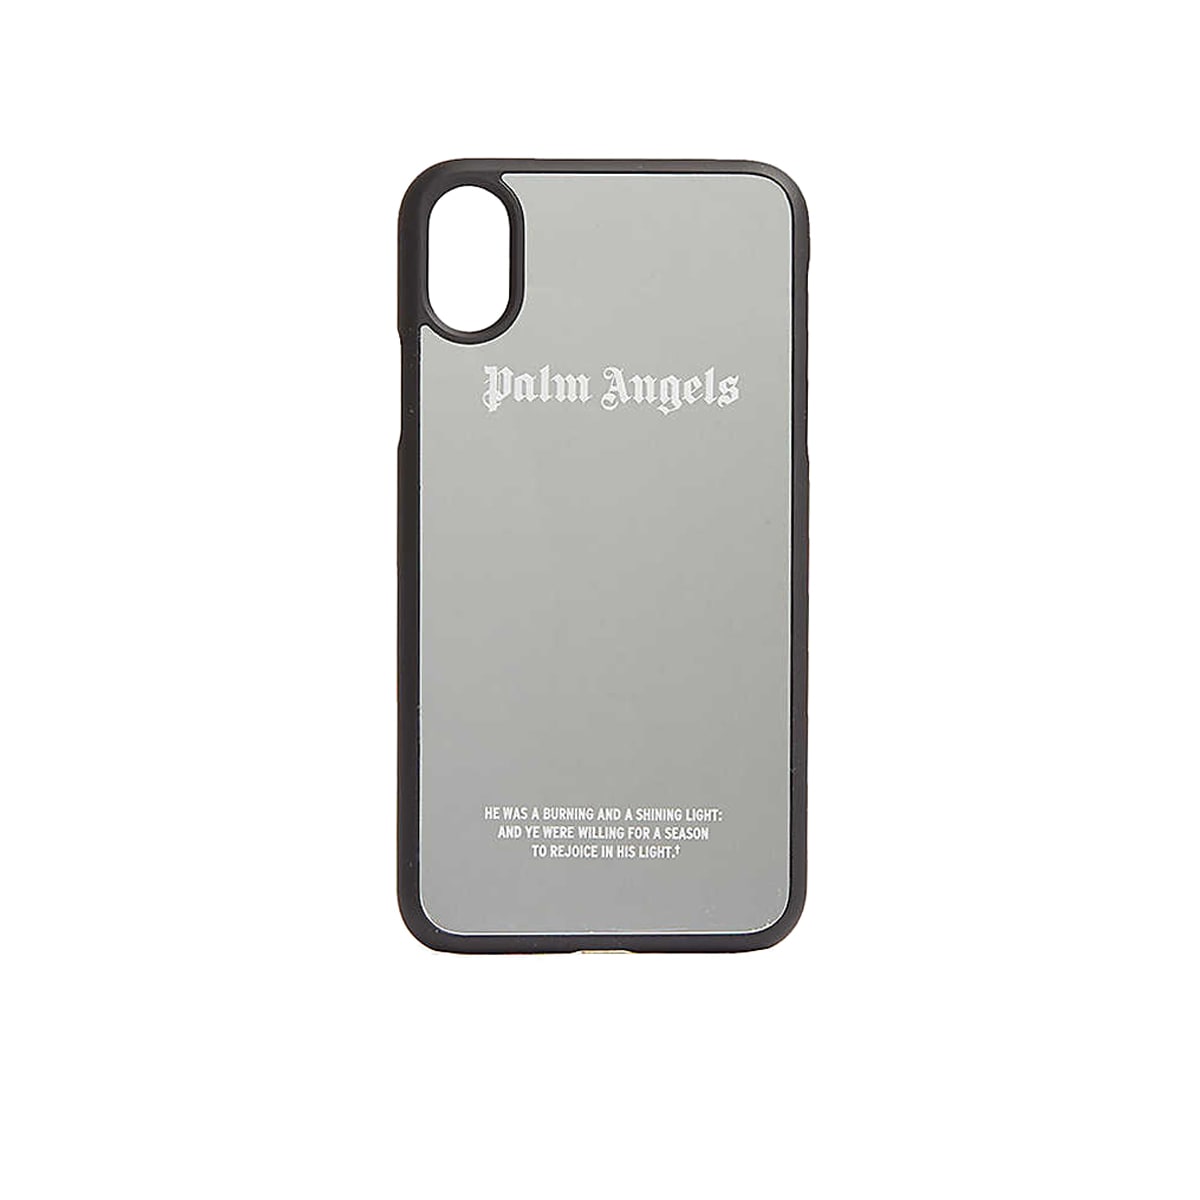 Willing fora. Metallic Case iphone. Чехол los Angeles на айфон прозрачный. Palm devices Metallic Case. Galaxy Case Silver Metall.